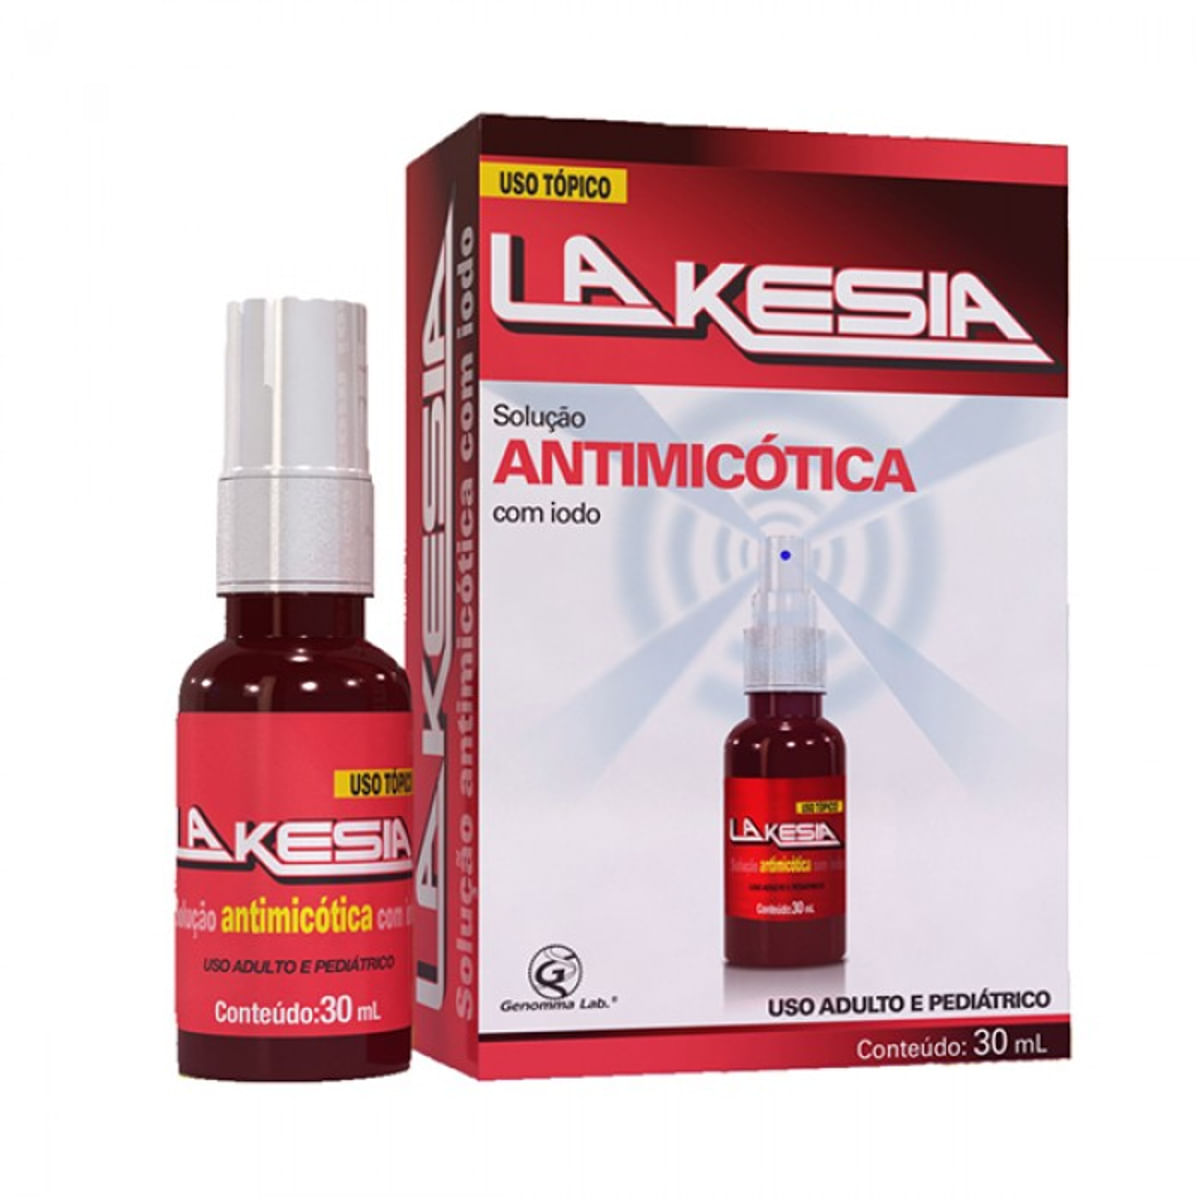 solucao-antimicotica-lakesia-30-ml-1.jpg